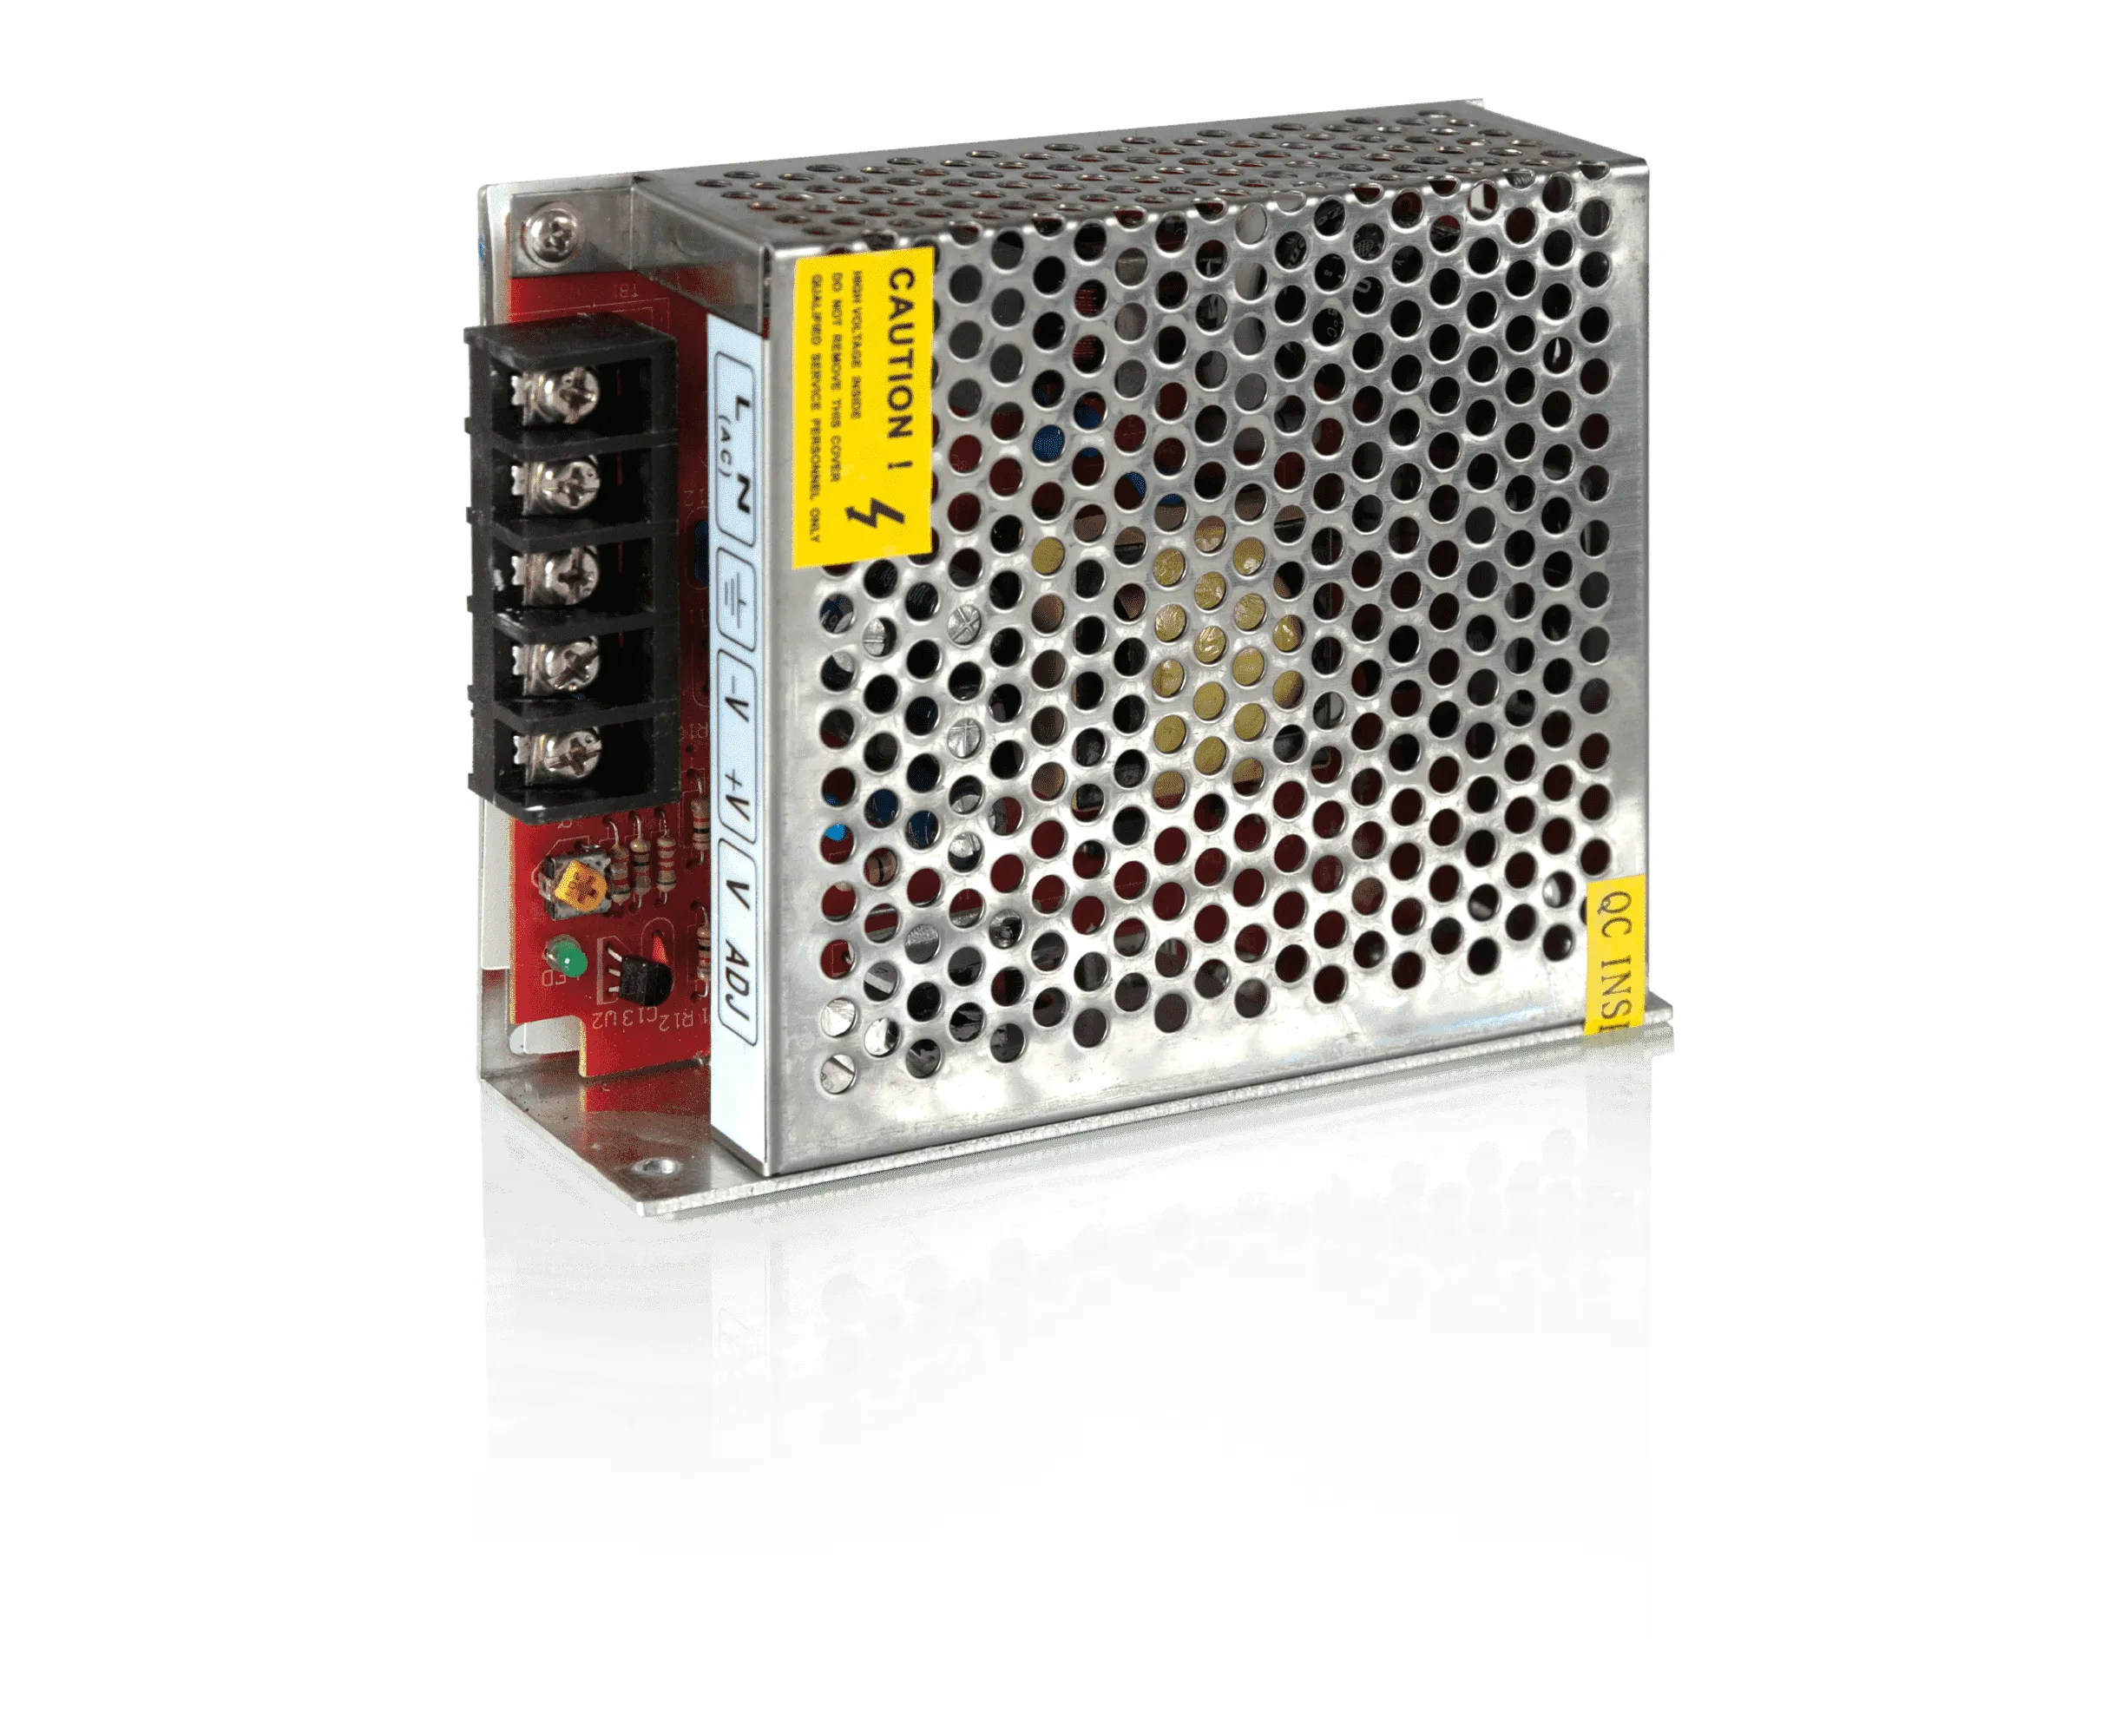  питания Gauss LED STRIP PS 60W 12V арт. 202003060  за 899 Р .